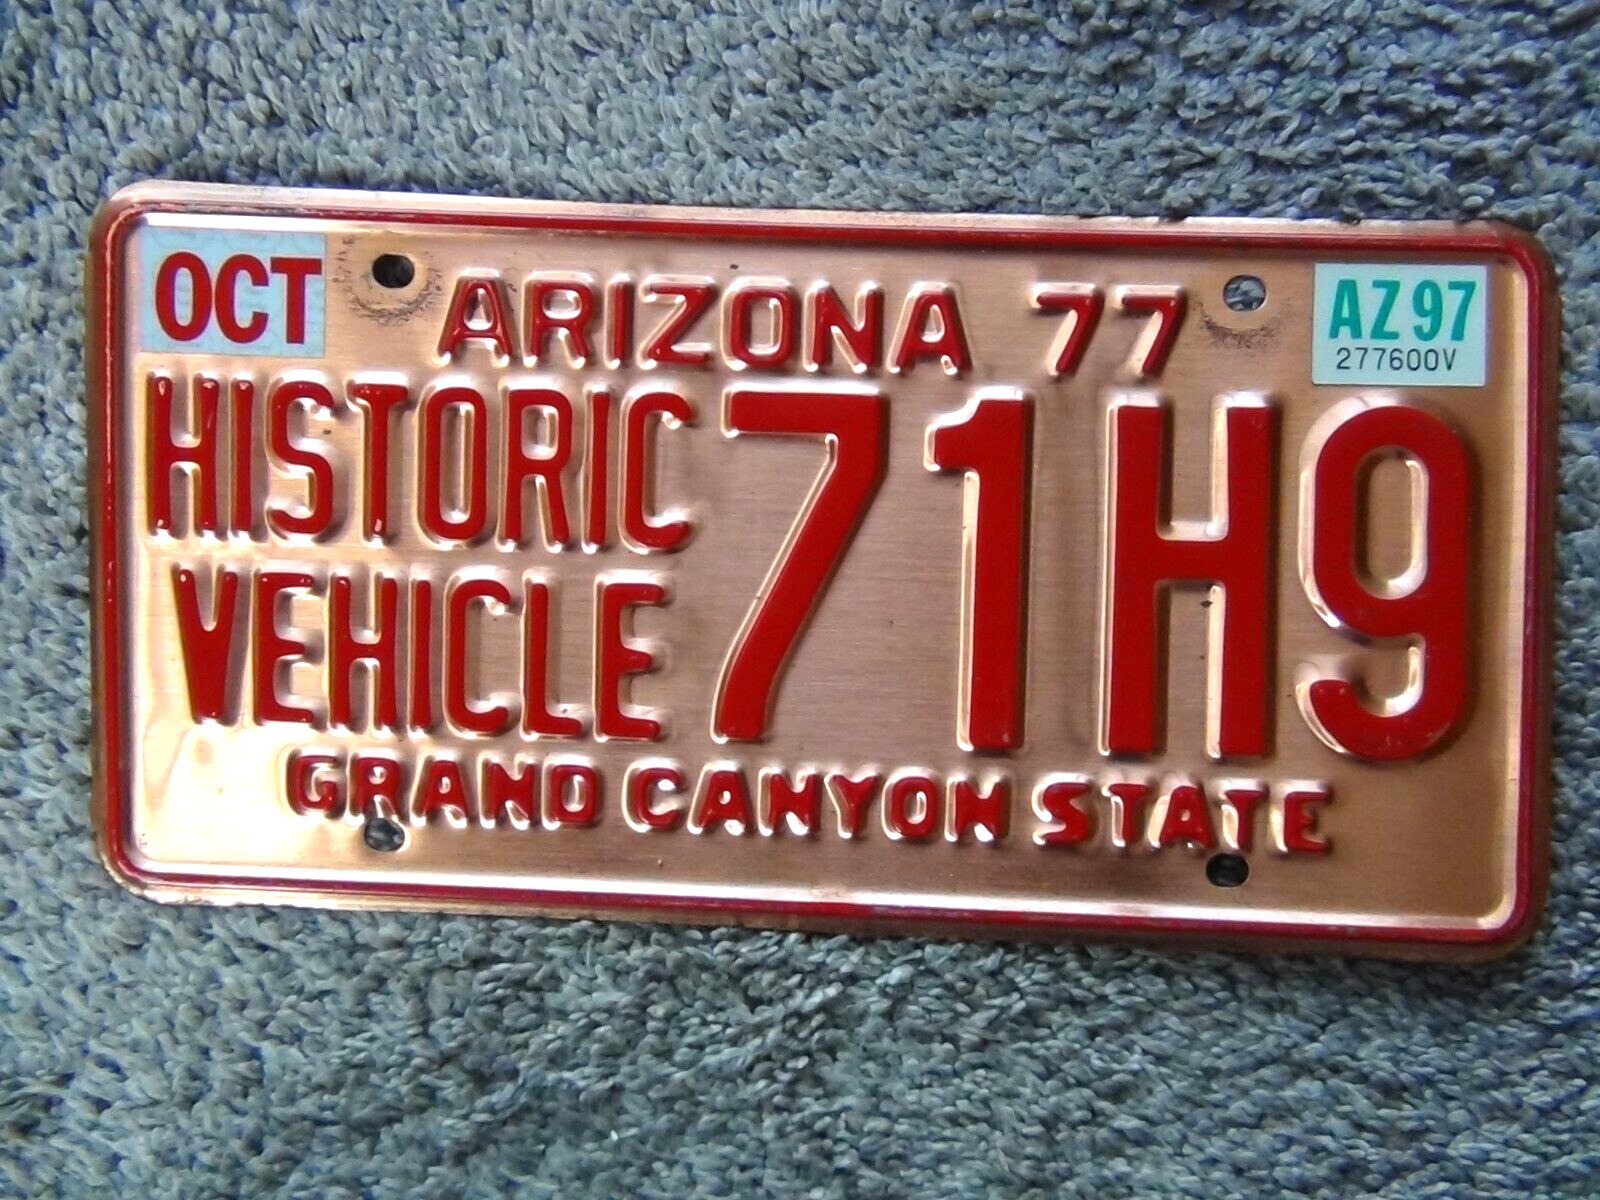 1997 Arizona Historic Vehicle  License Plate 71H9 Grand Canyon State